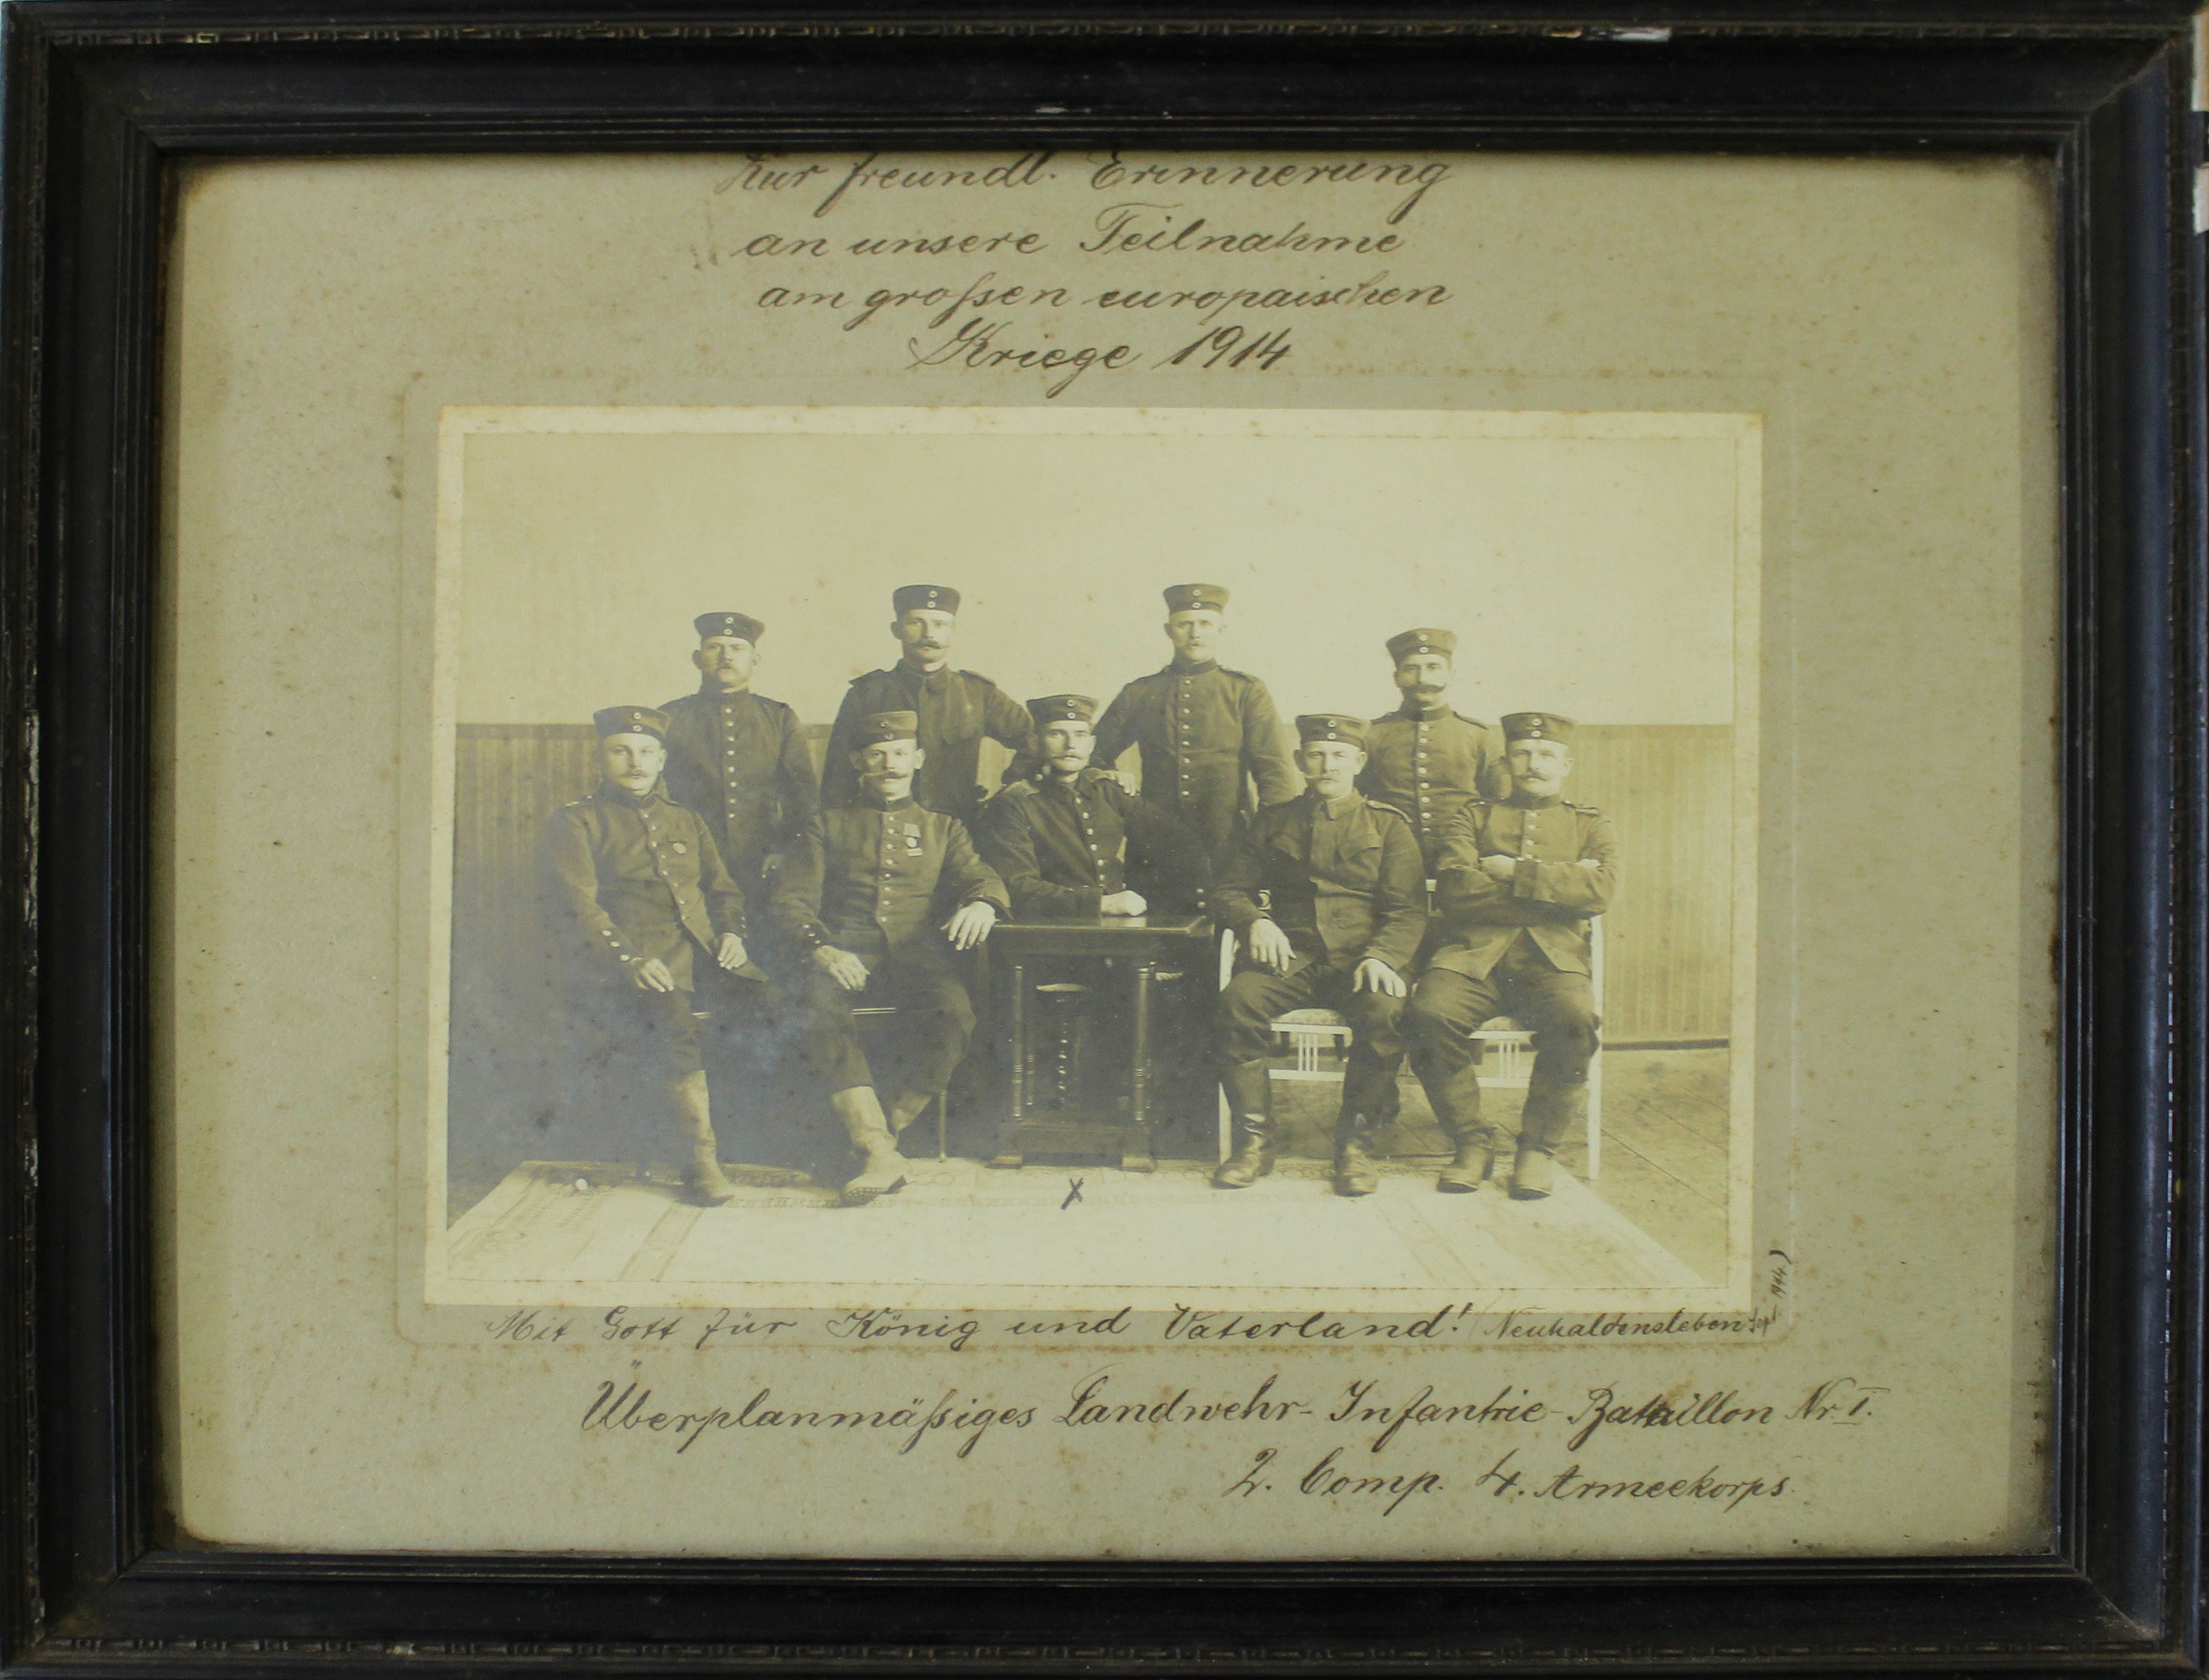 Fotografie, gerahmt, Unplanmäßiges Landwehr-Infanterie-Bataillon Nr. 1, 1914 (Museum Wolmirstedt RR-F)